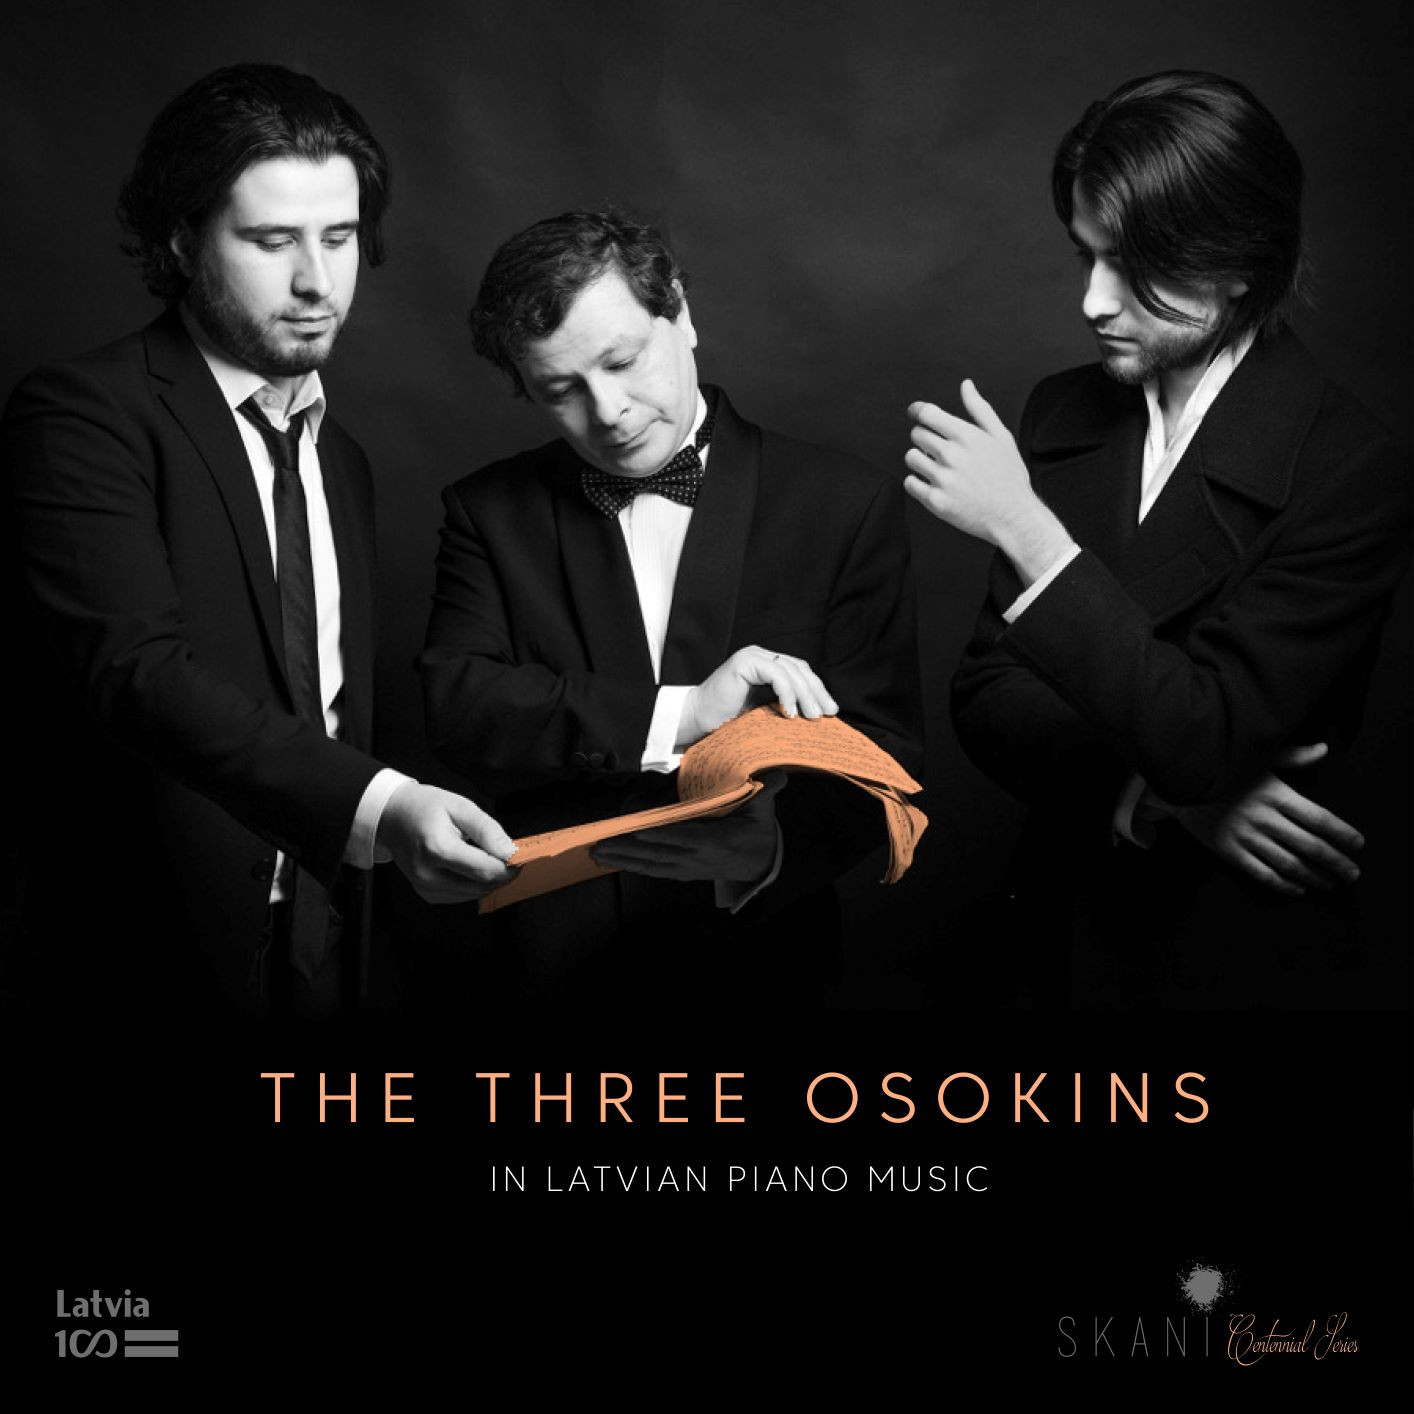 The Three Osokins in Latvian Piano Music